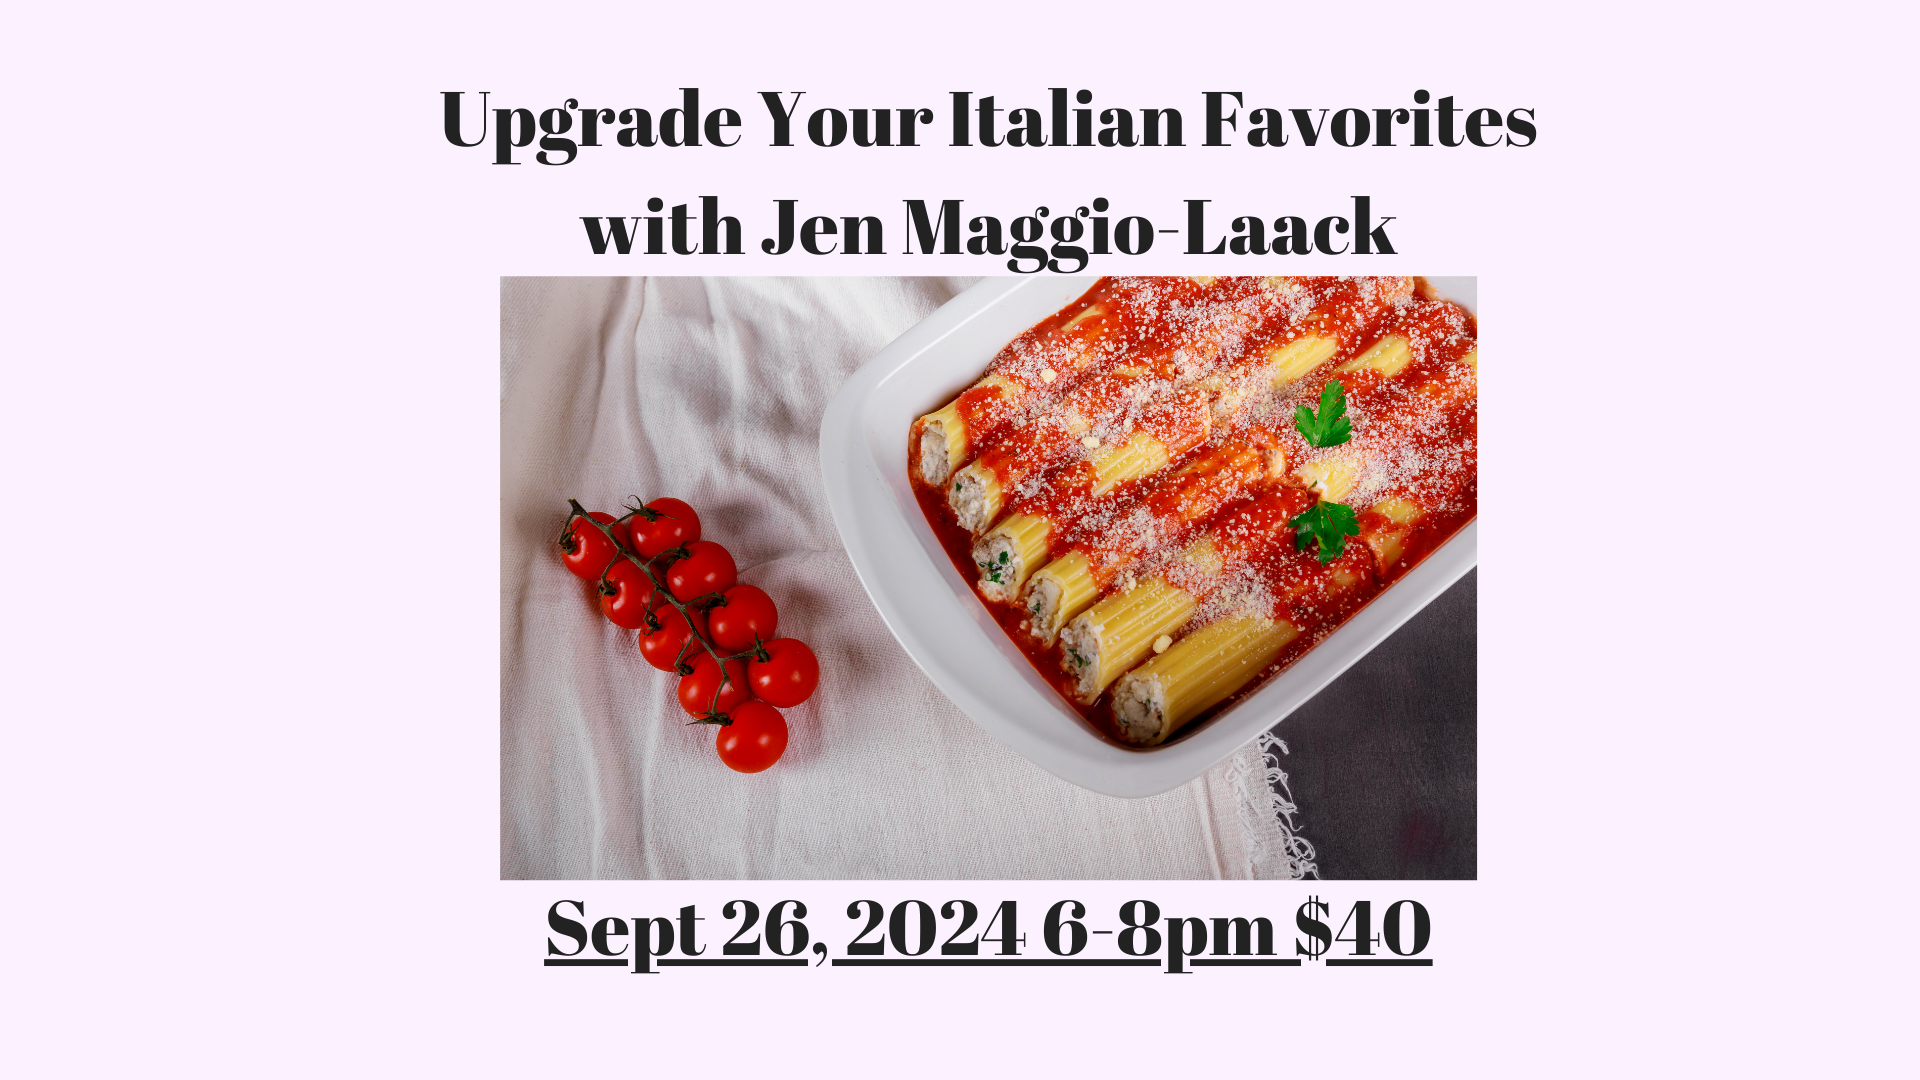 Upgrade your Italian Favorites  Sept 26, 2024 6-8pm $40.00